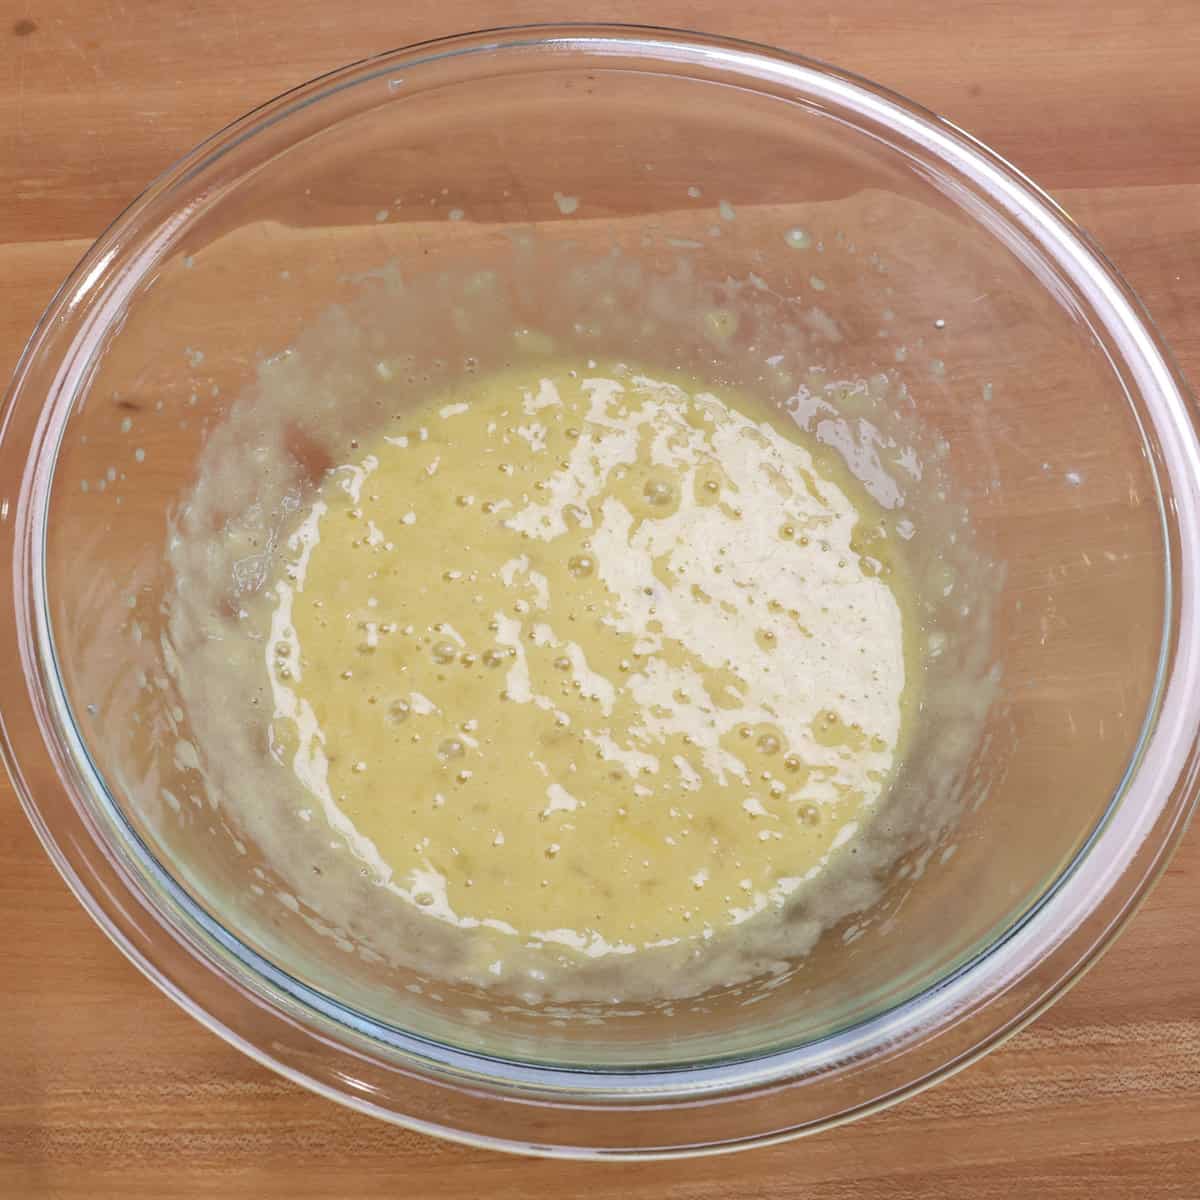 banana bread batter in a mixing bowl.